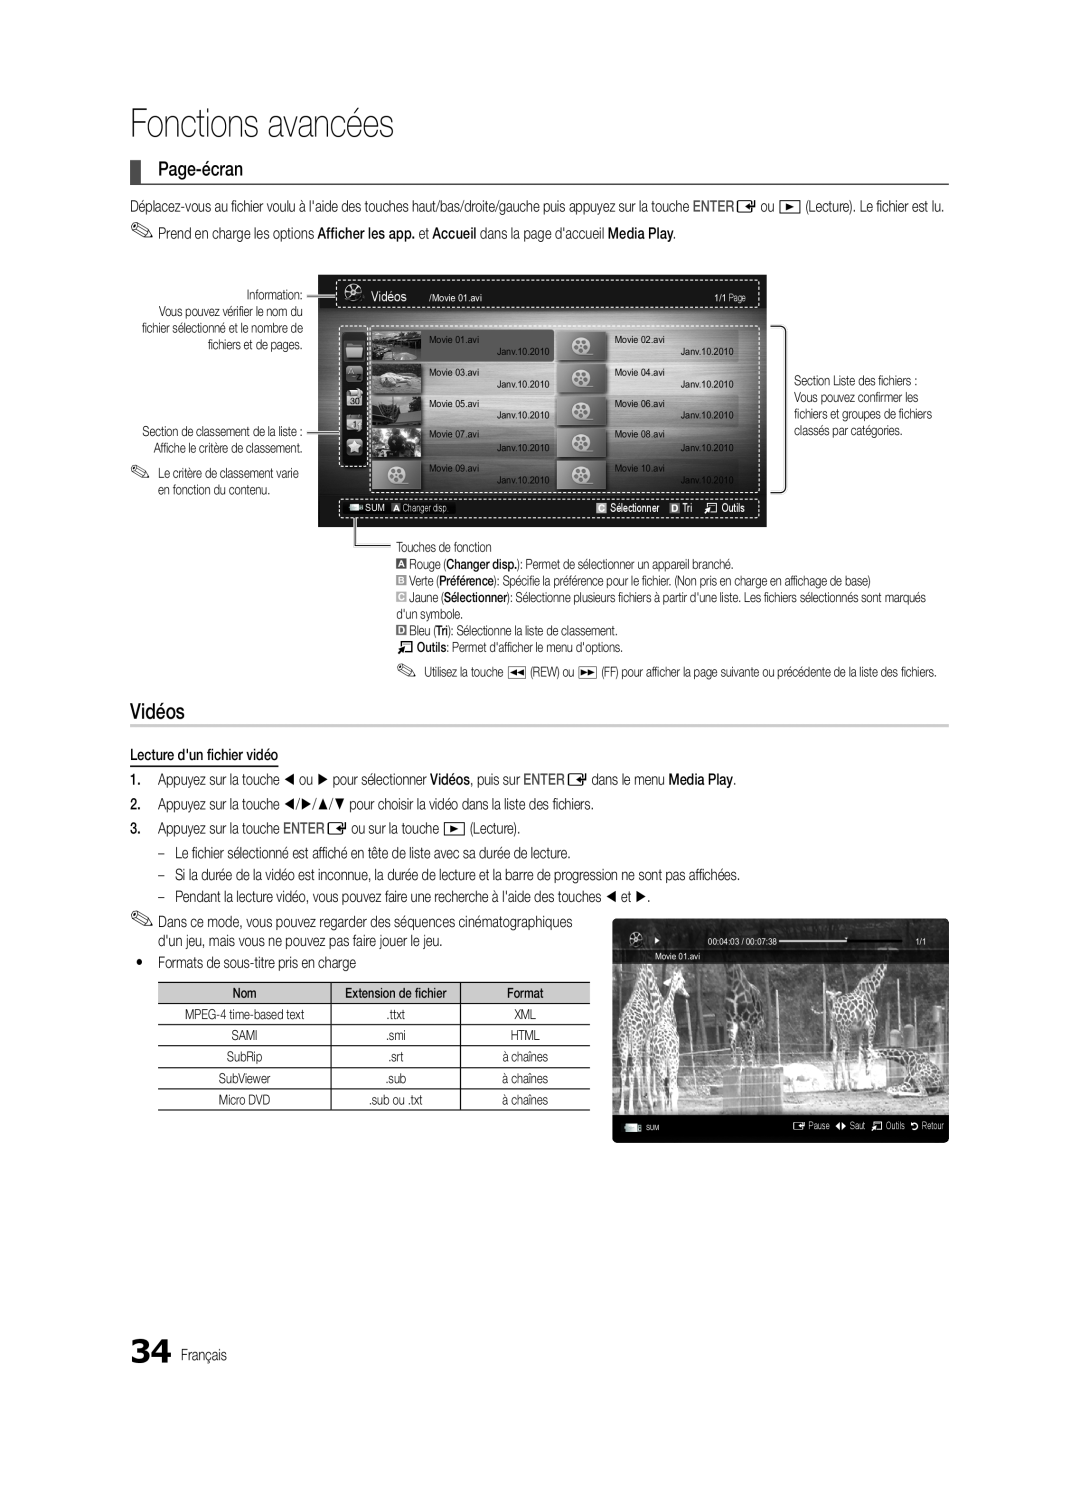 Samsung BN68-03004B-02, UC5000-ZC user manual Vidéos, Page-écran, Fonctions avancées 